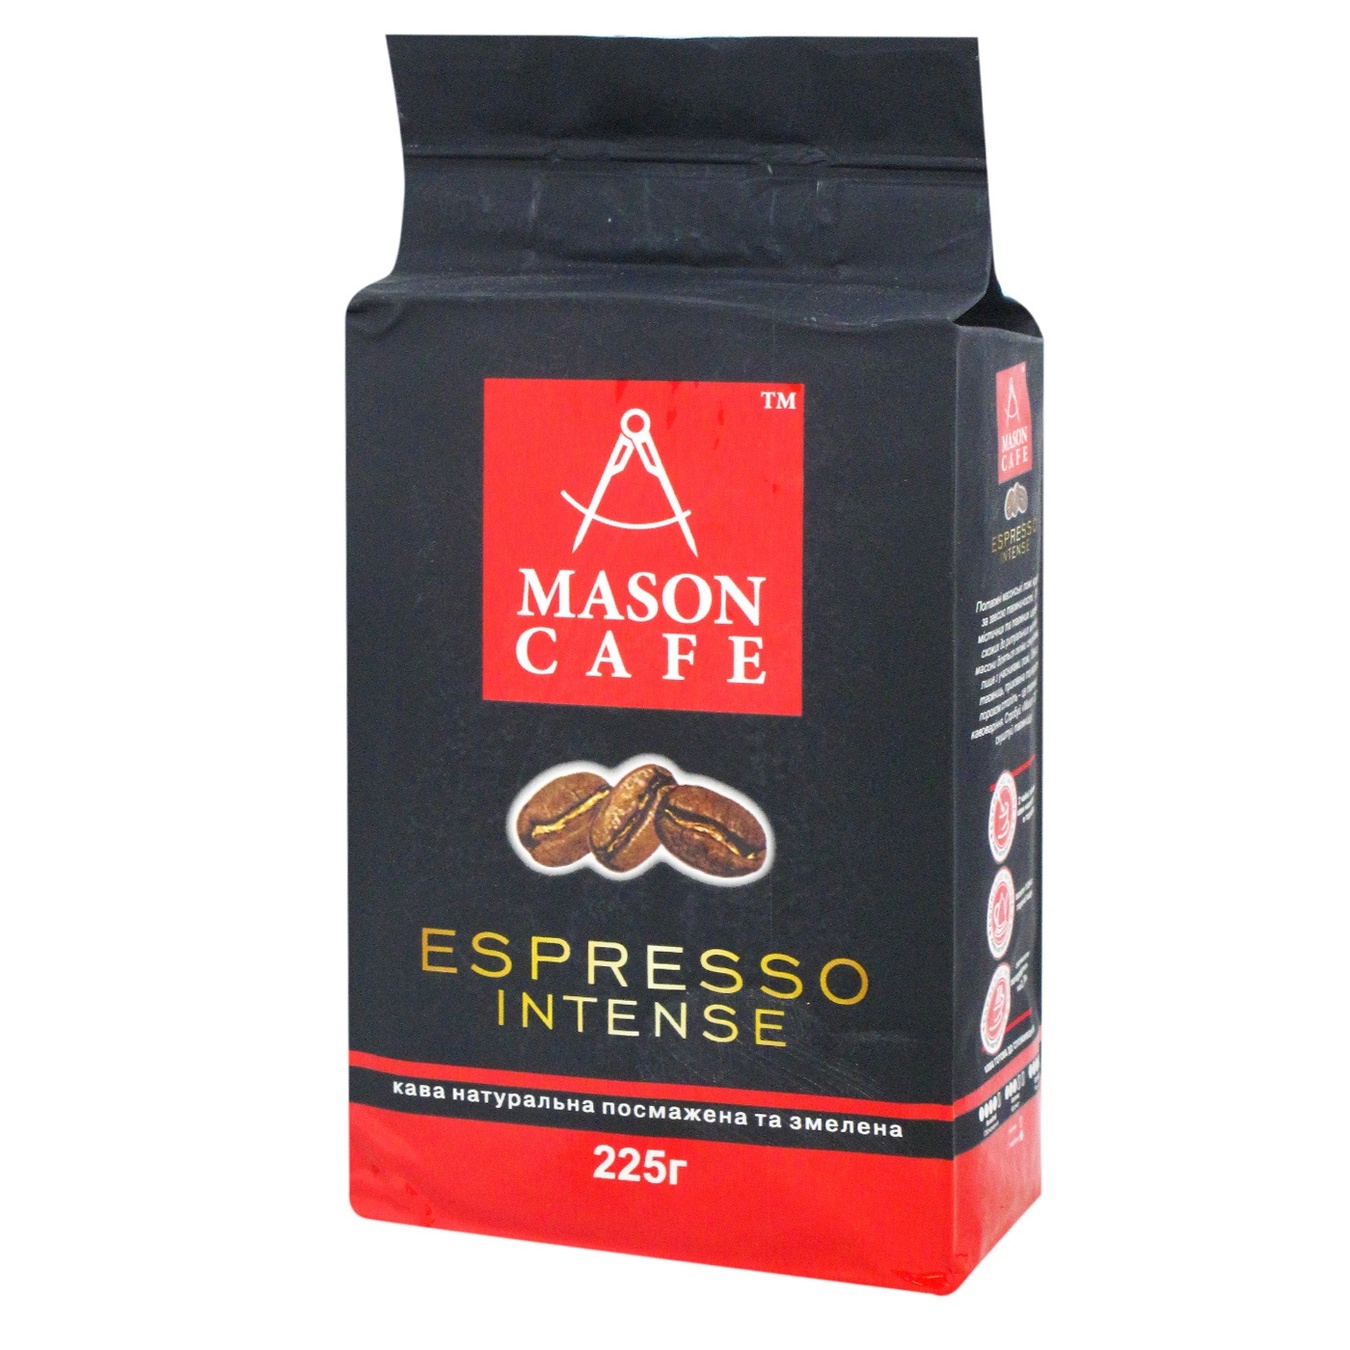 Кофе молотый Espresso Intense Mason cafe пакет 225г